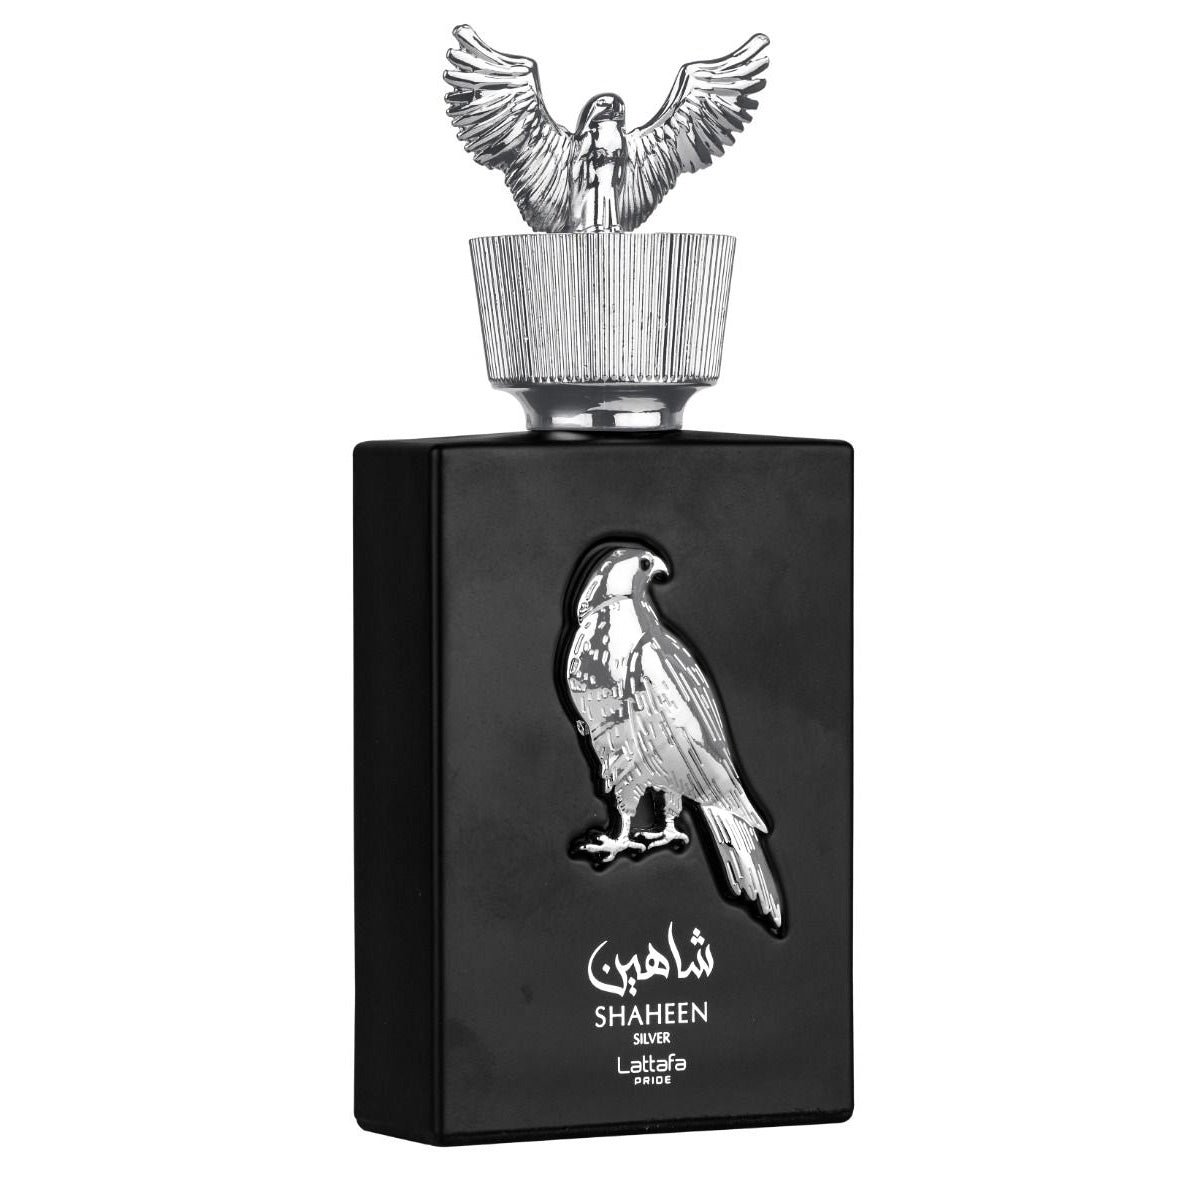 Shaheen Silver Eau De Parfum 100ml Lattafa Pride-Perfume Heaven